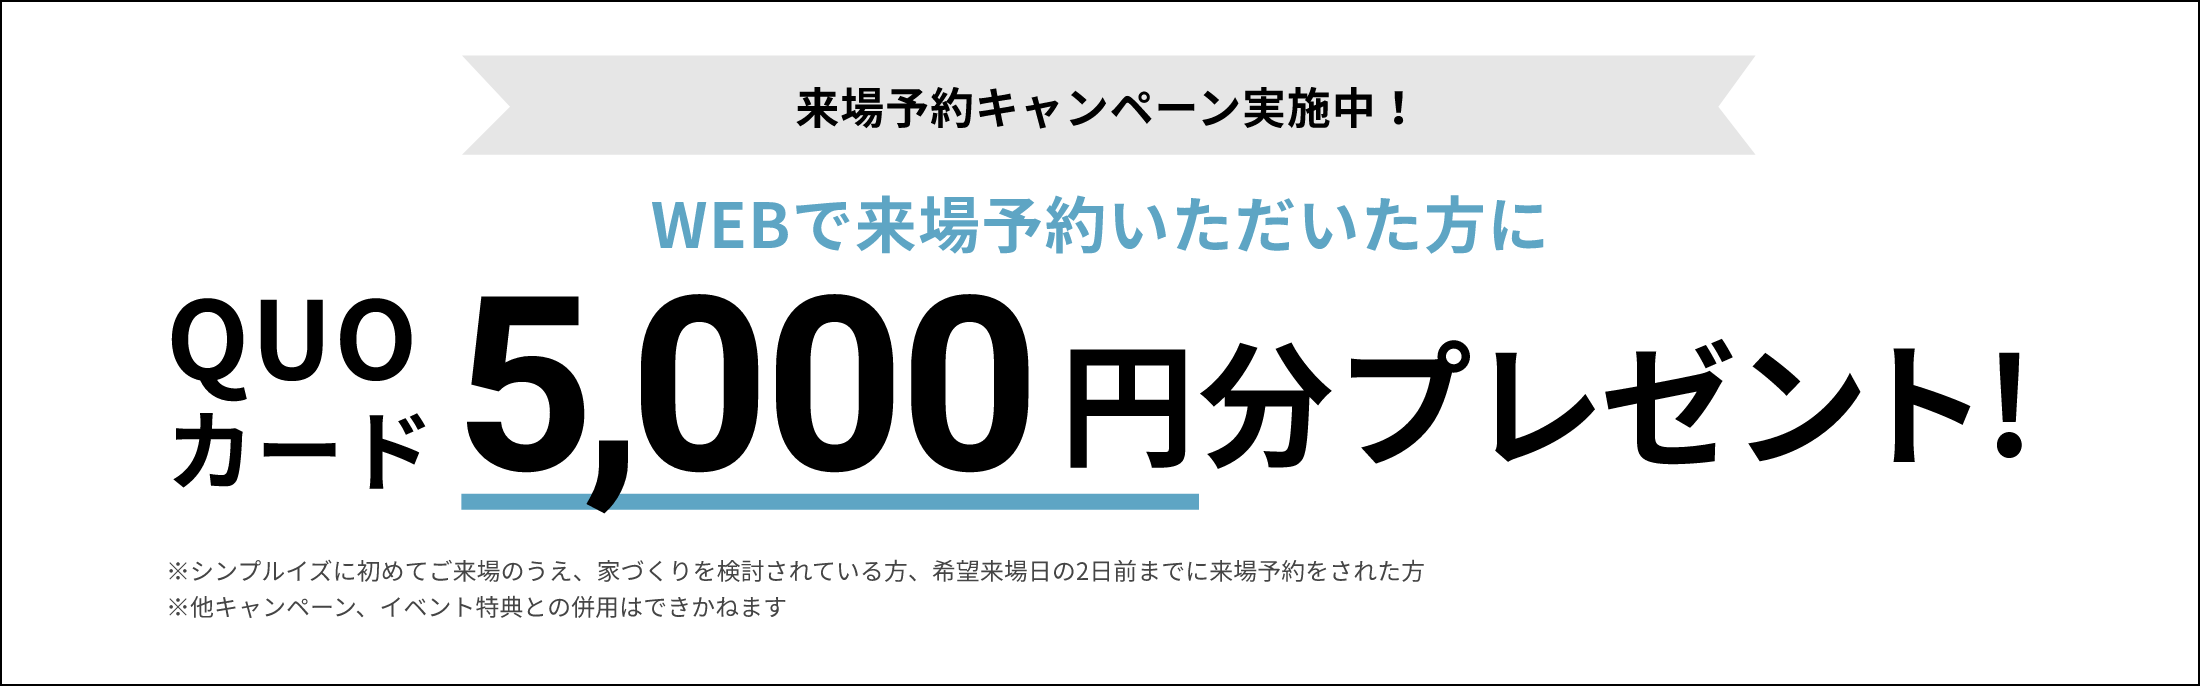 WEB予約限定 QUOカード3,000円分プレゼント!